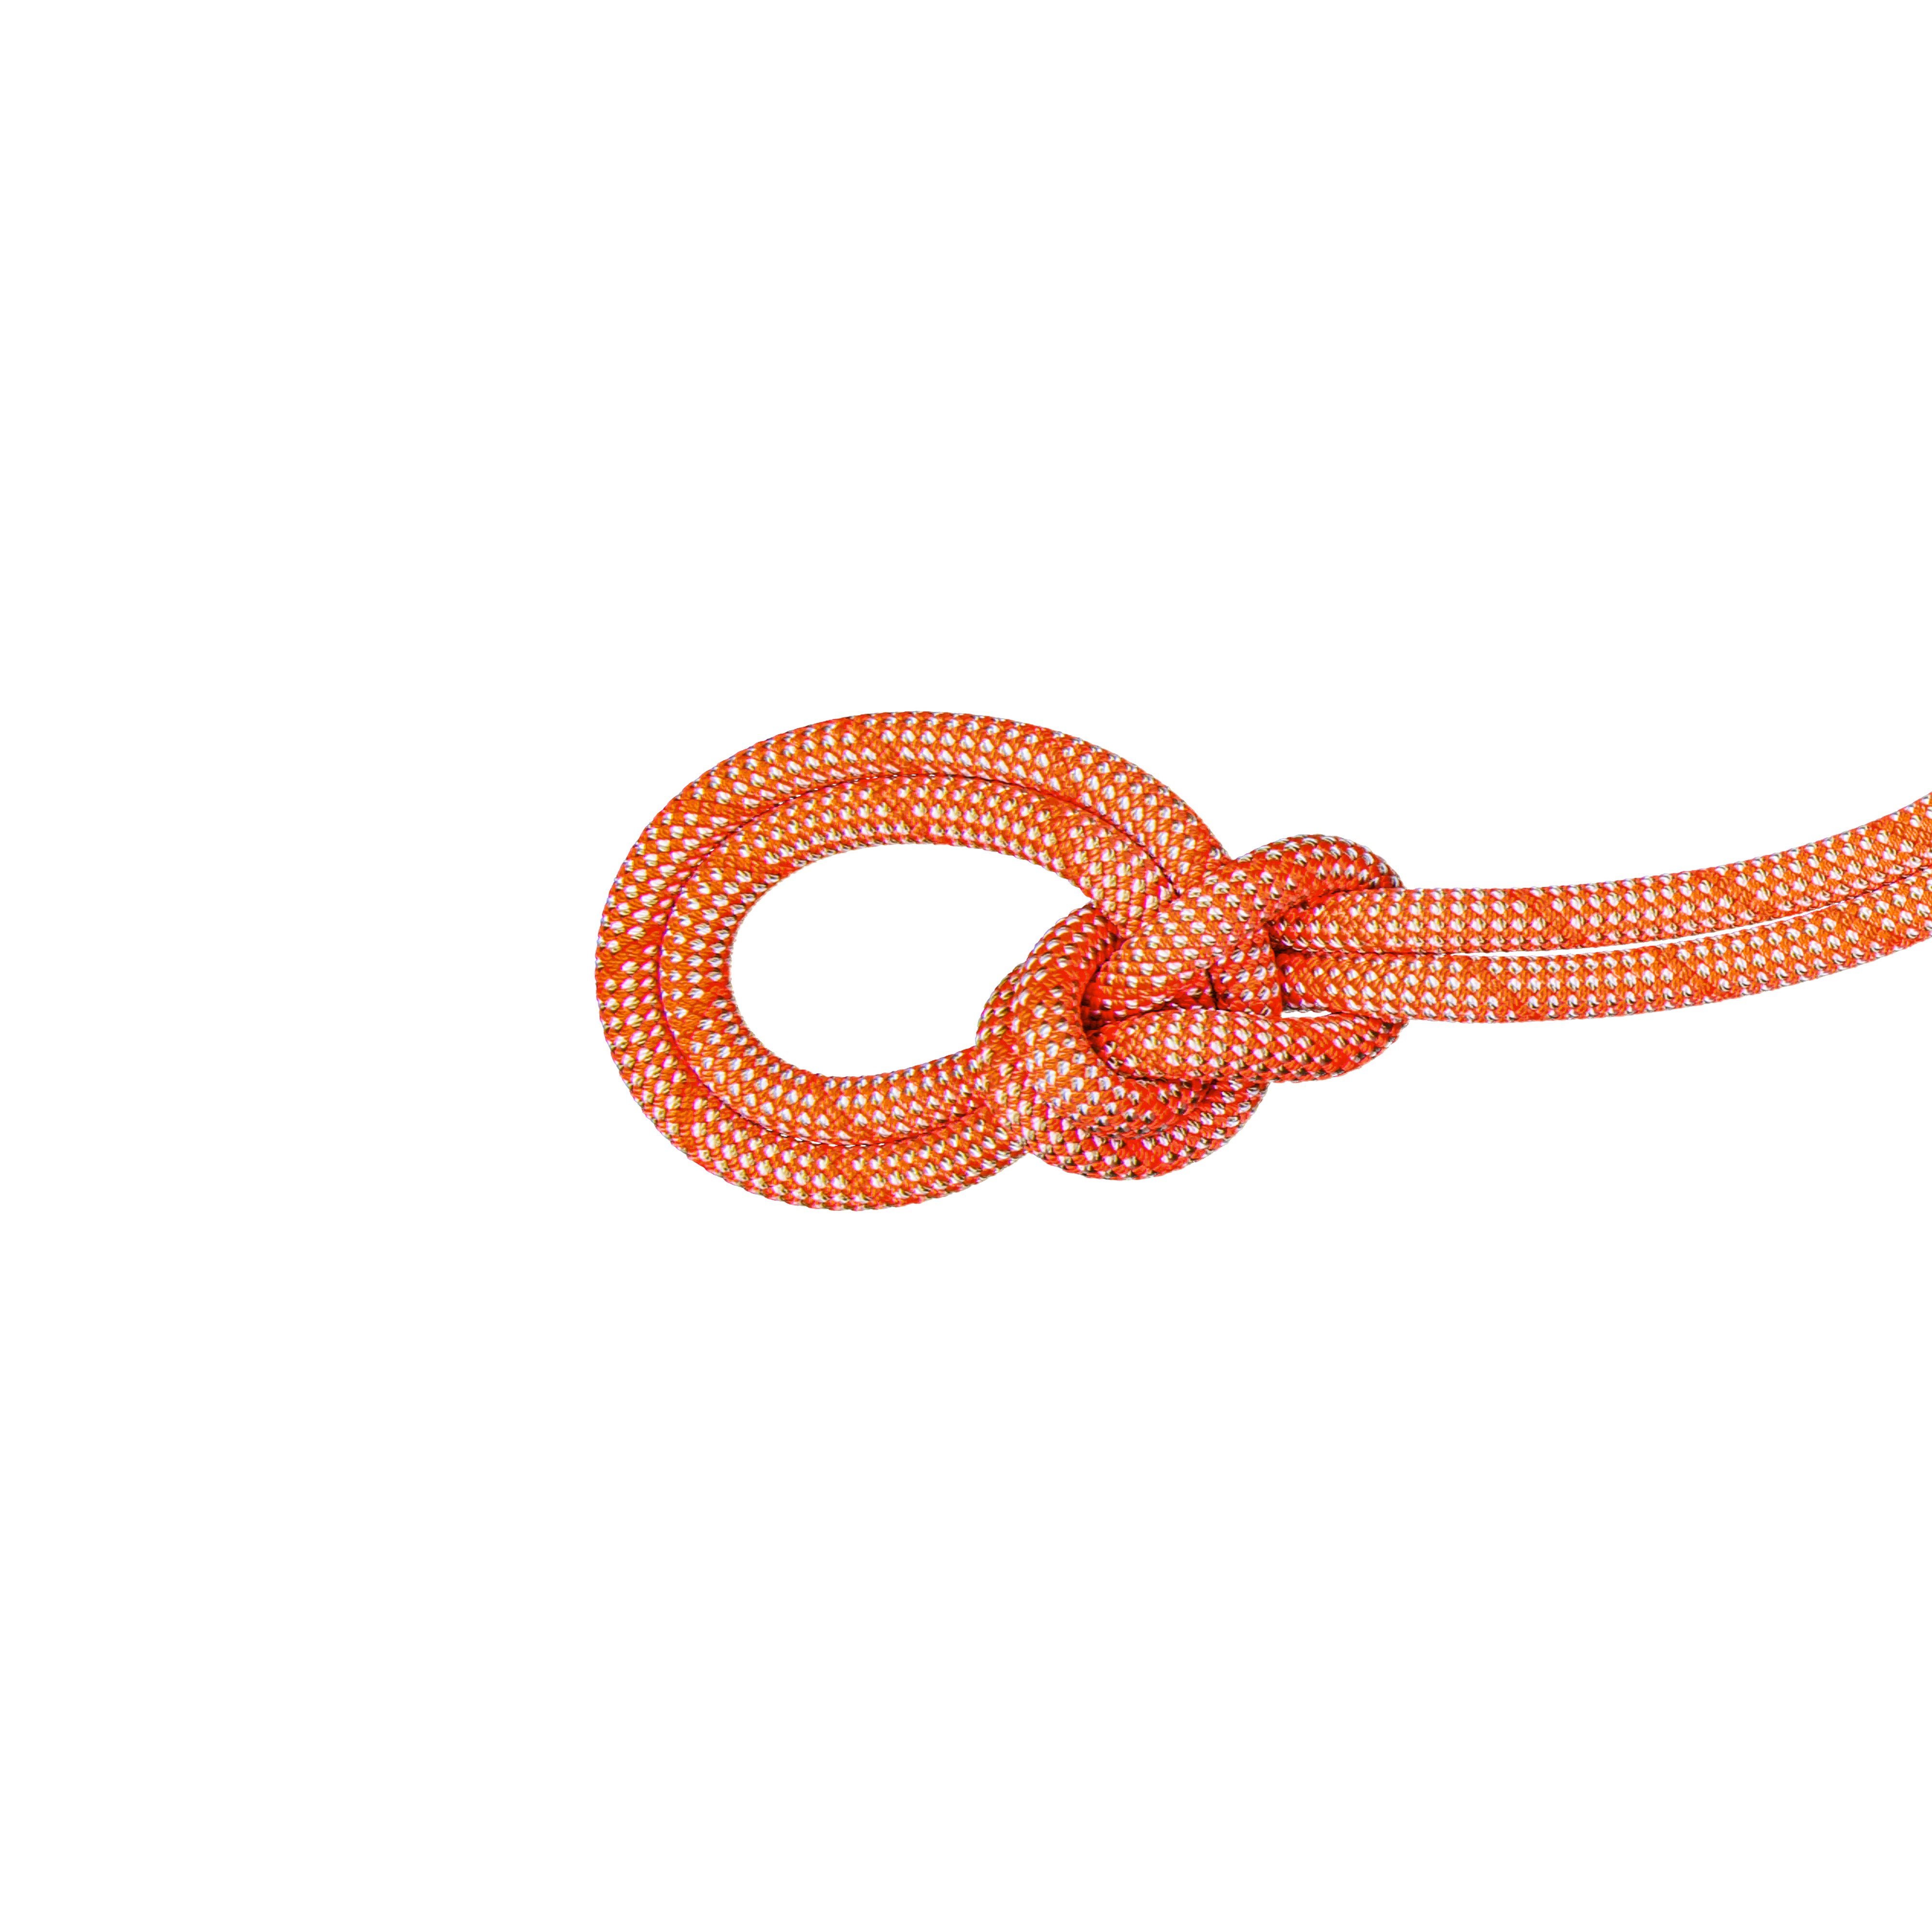 9.8 Crag Classic Rope - Classic Standard, orange-white, 80 m thumbnail